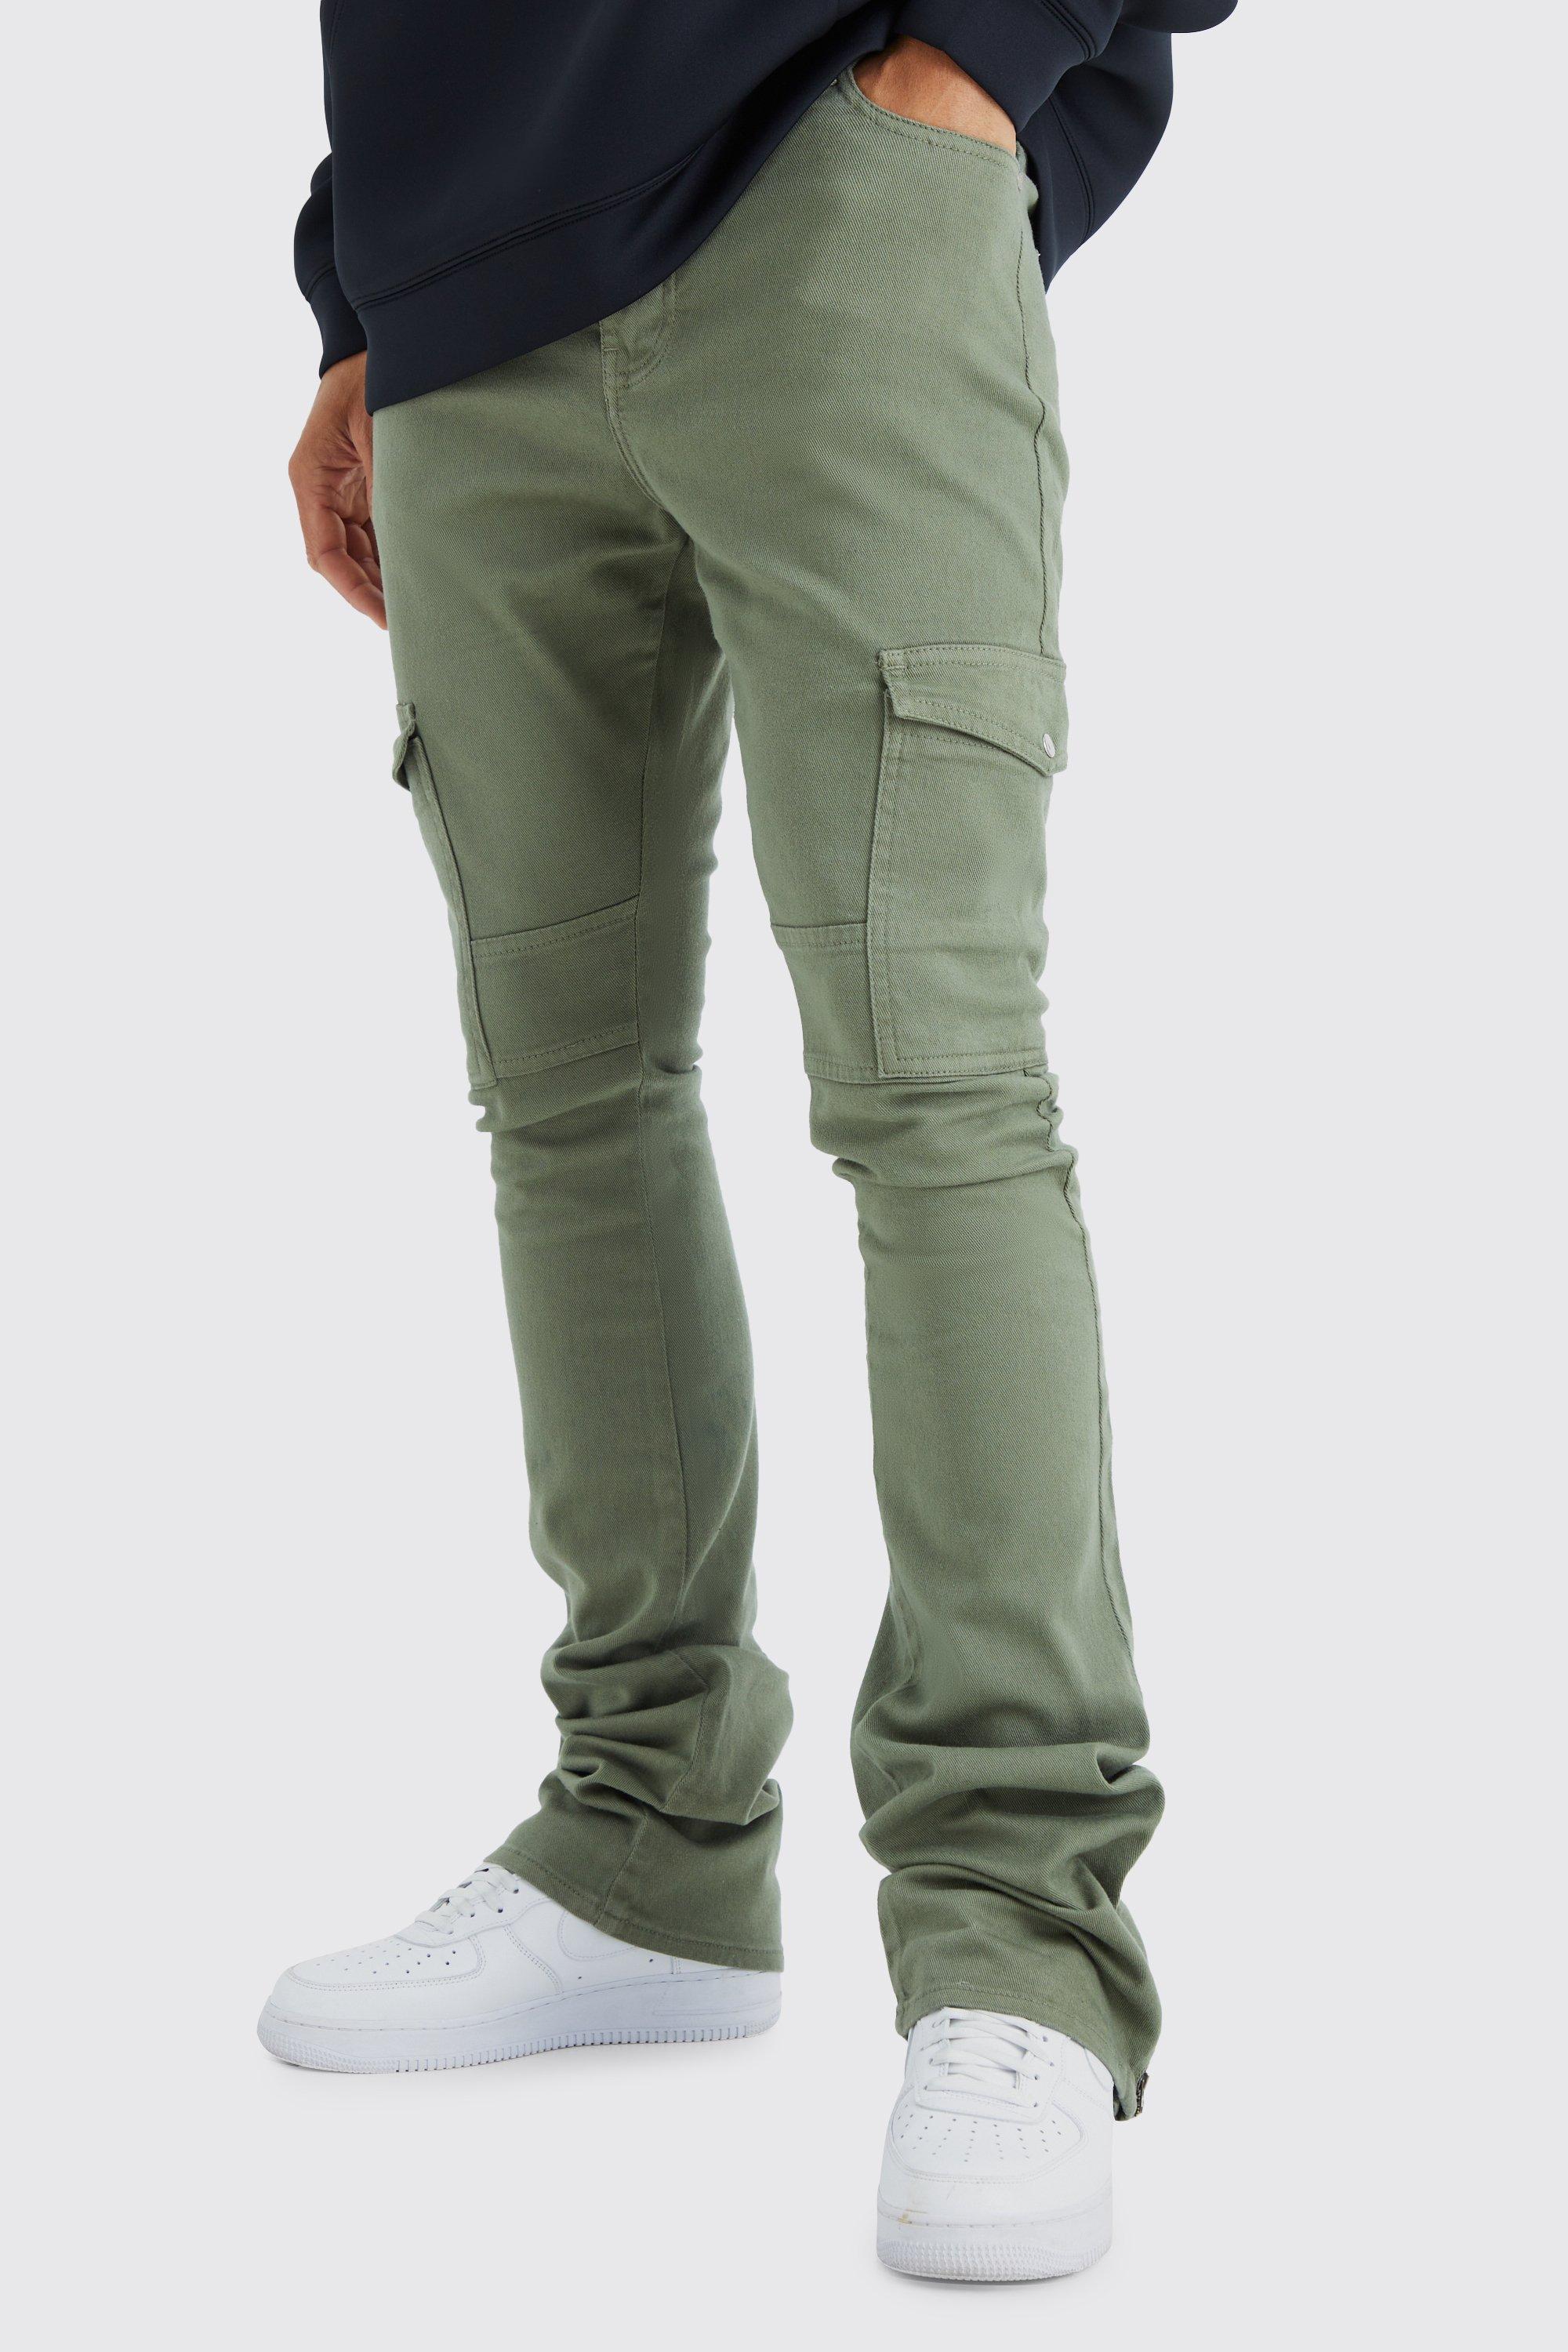 tall - pantalon cargo zippé homme - vert - 36, vert